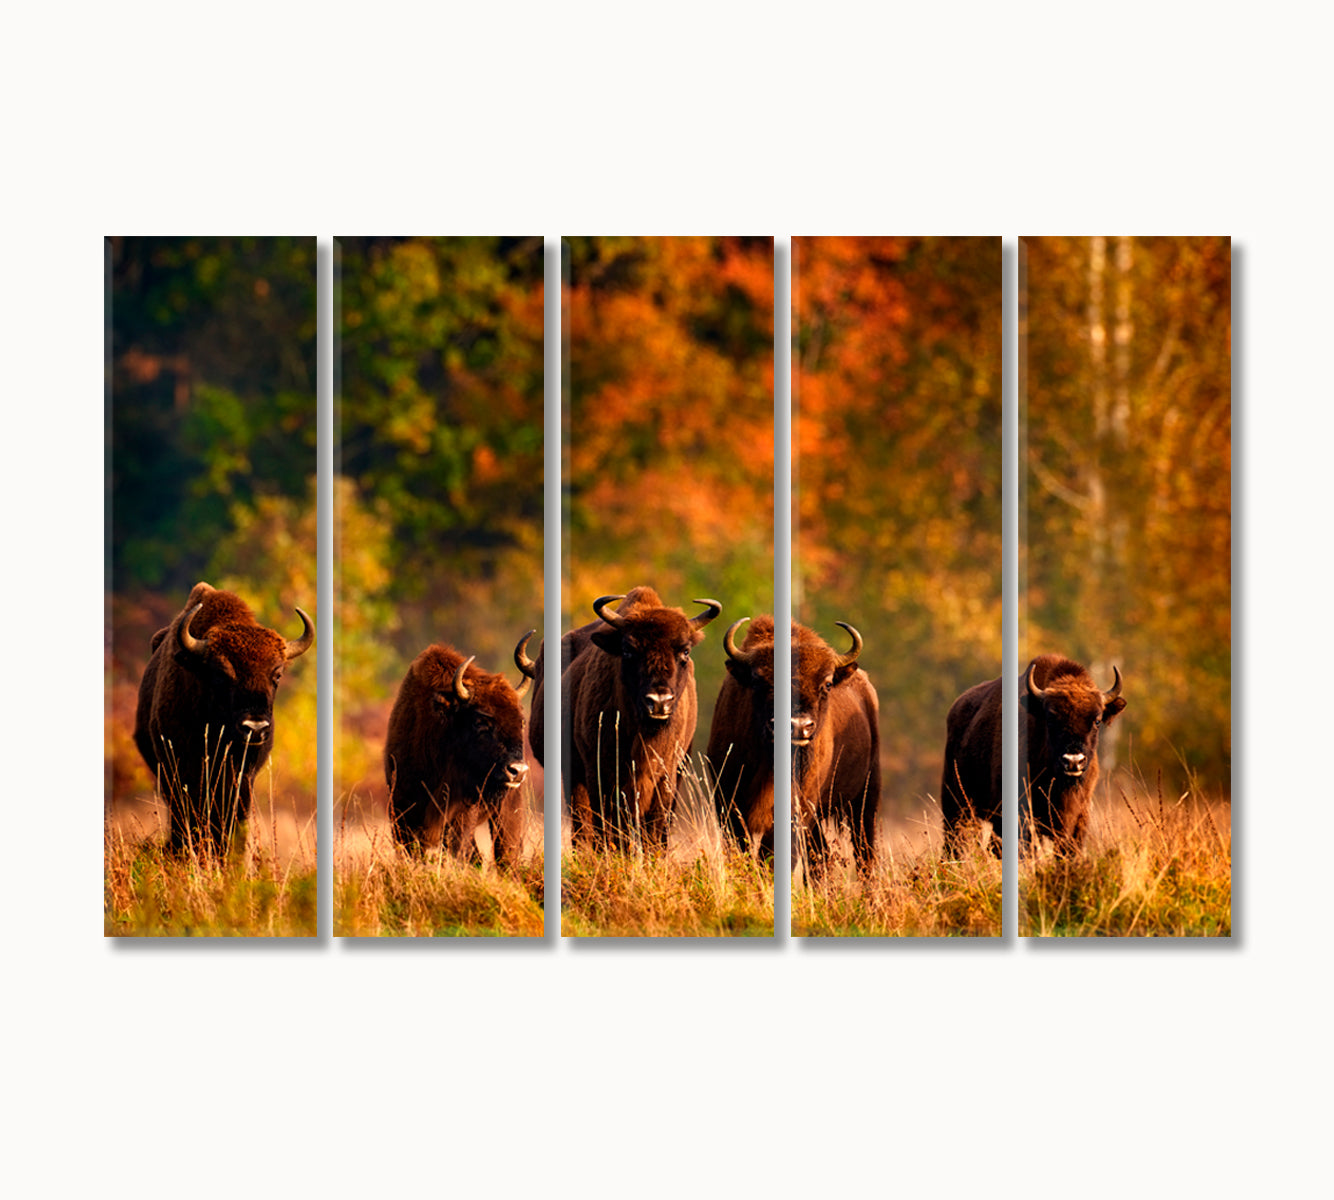 Bison Herd in the Autumn Forest Canvas Print-Canvas Print-CetArt-5 Panels-36x24 inches-CetArt